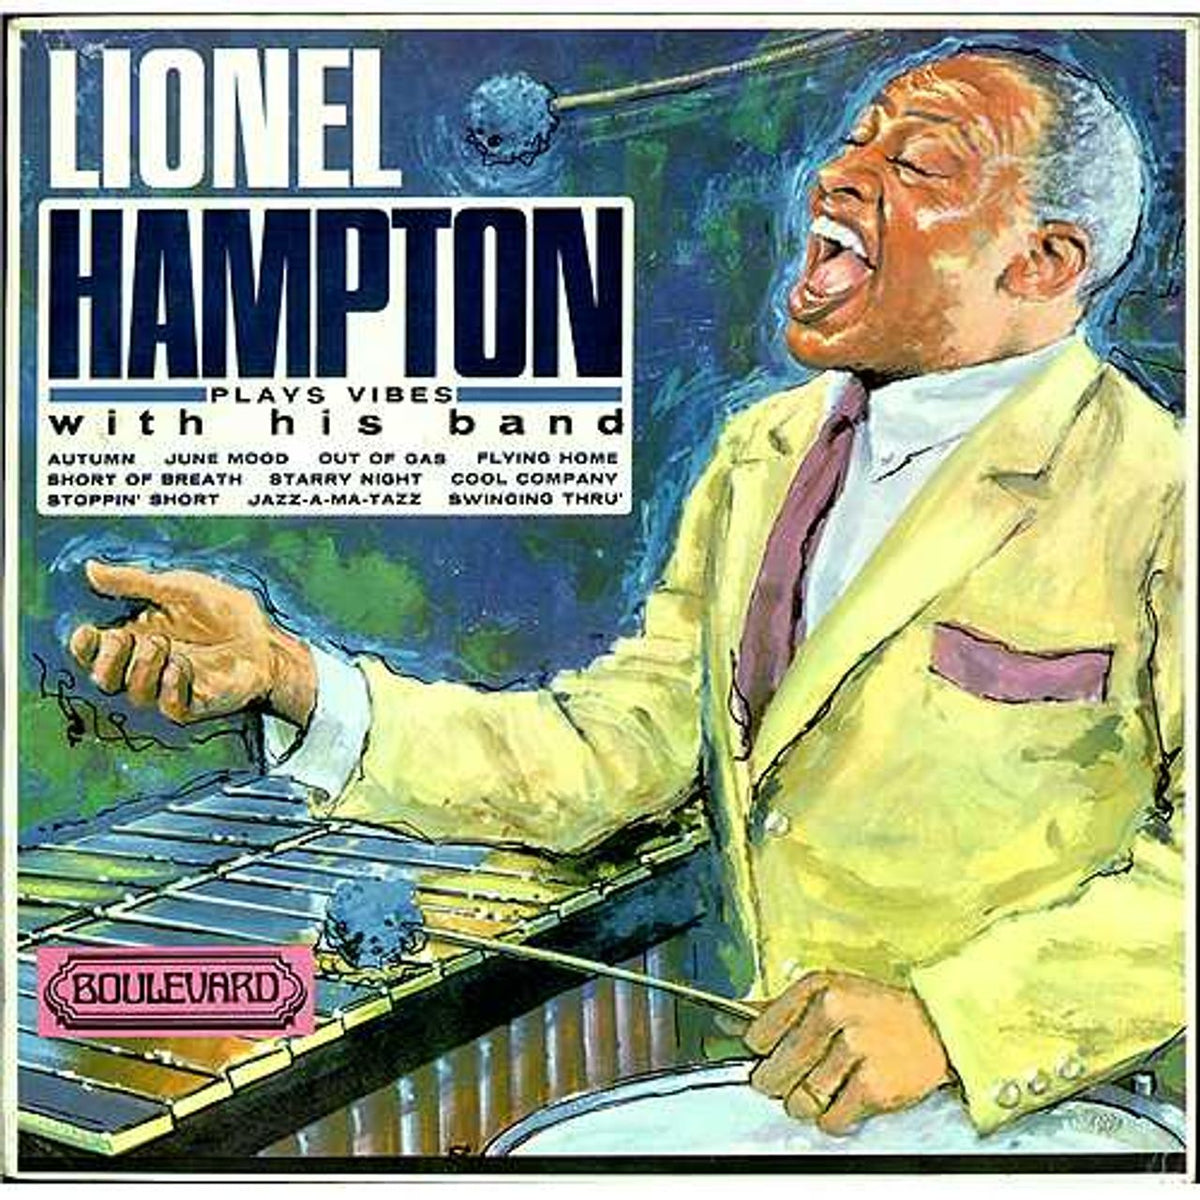 Lionel Hampton Story (Mini Lp Sleeve)-